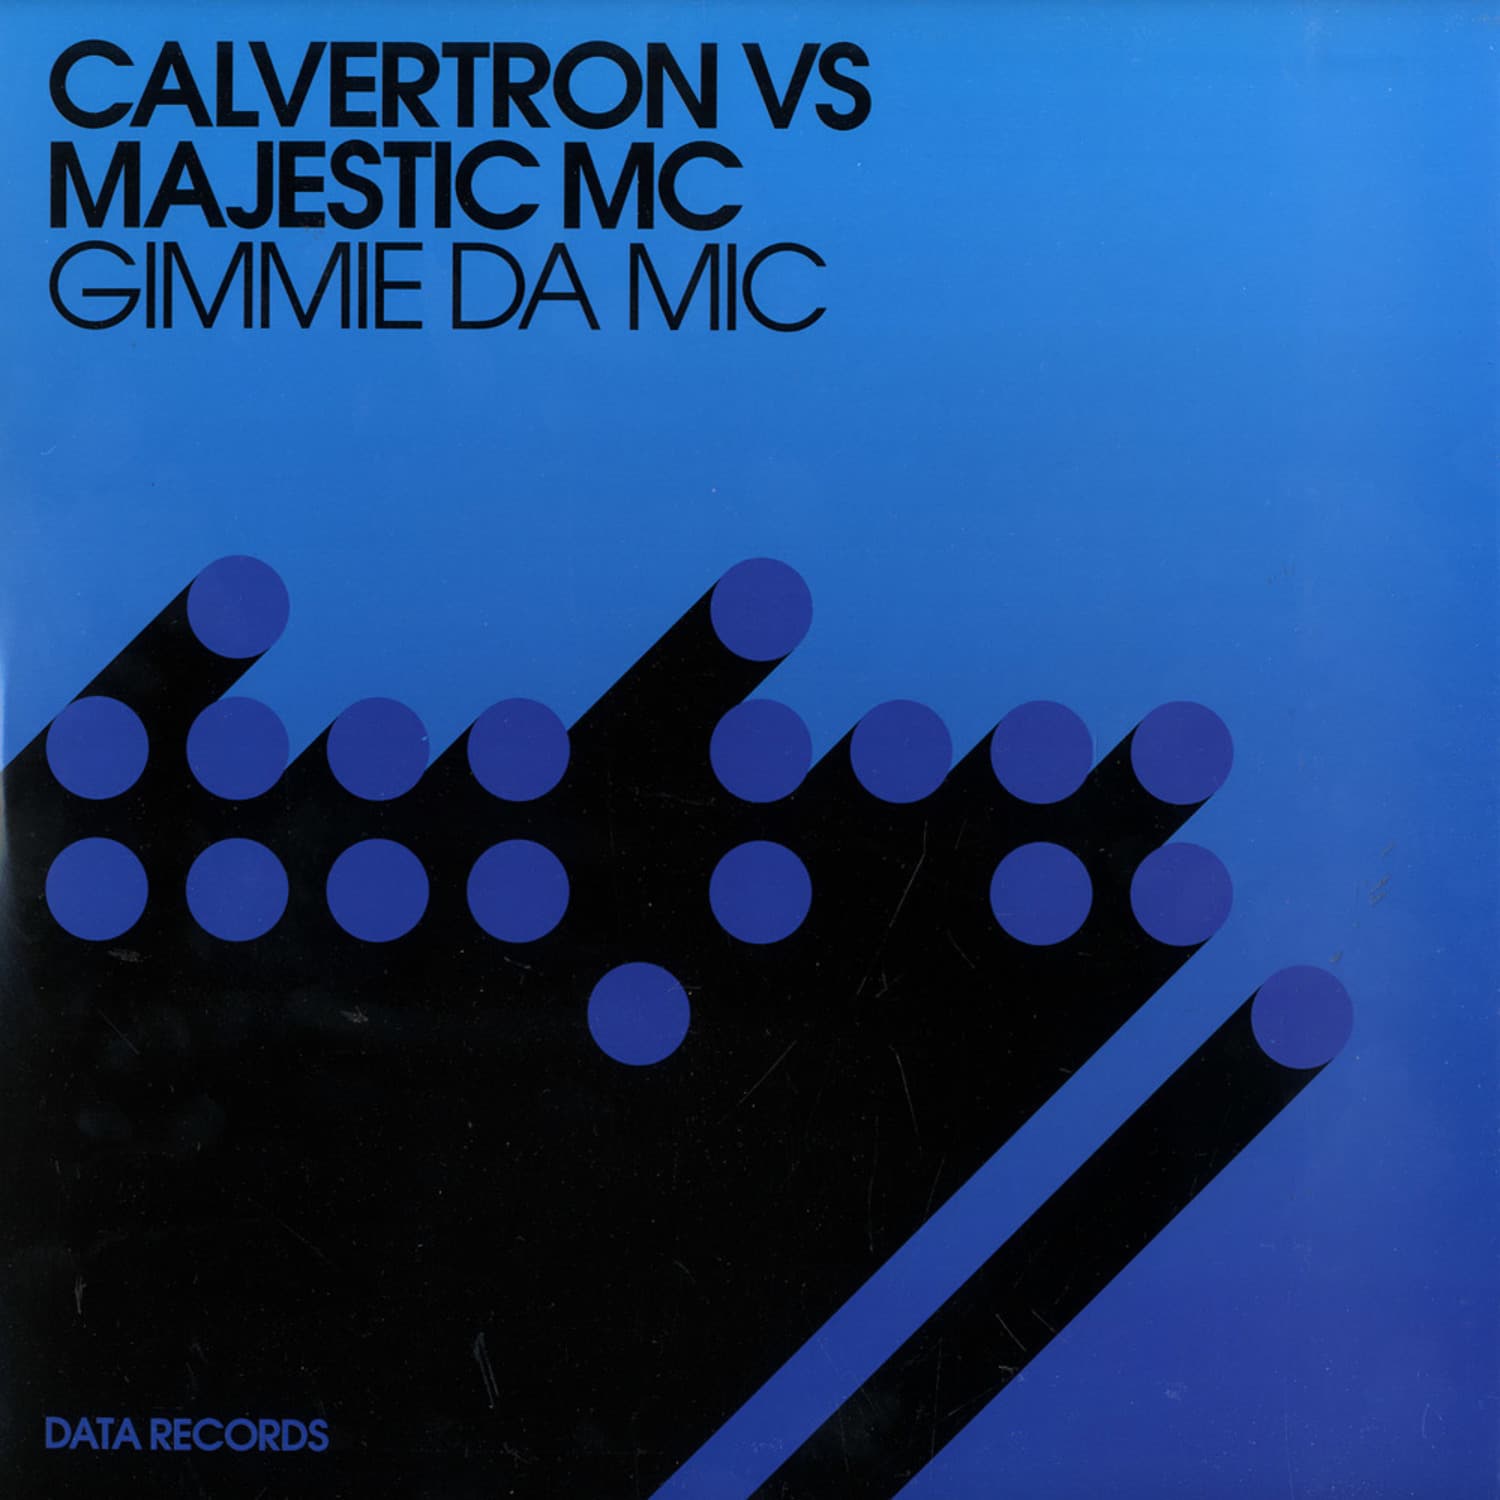 Calvertron vs Majestic MC - GIMME DA MIC